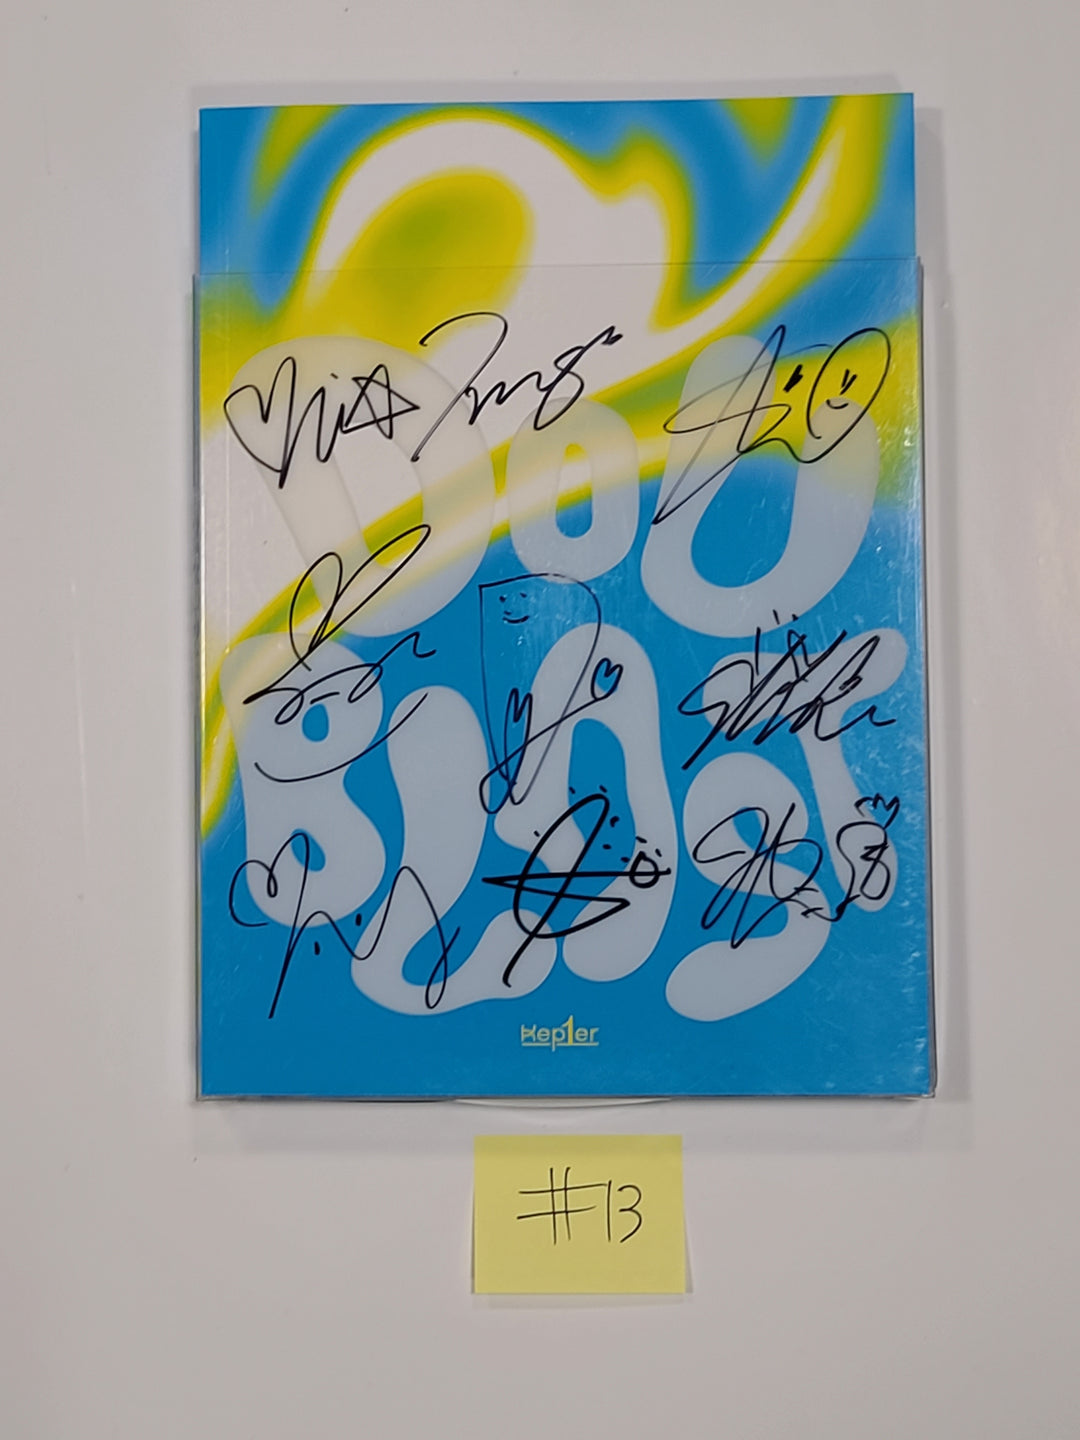 Kep1er "DOUBLAST" 2nd Mini Album - Hand Autographed(Signed) Promo Album